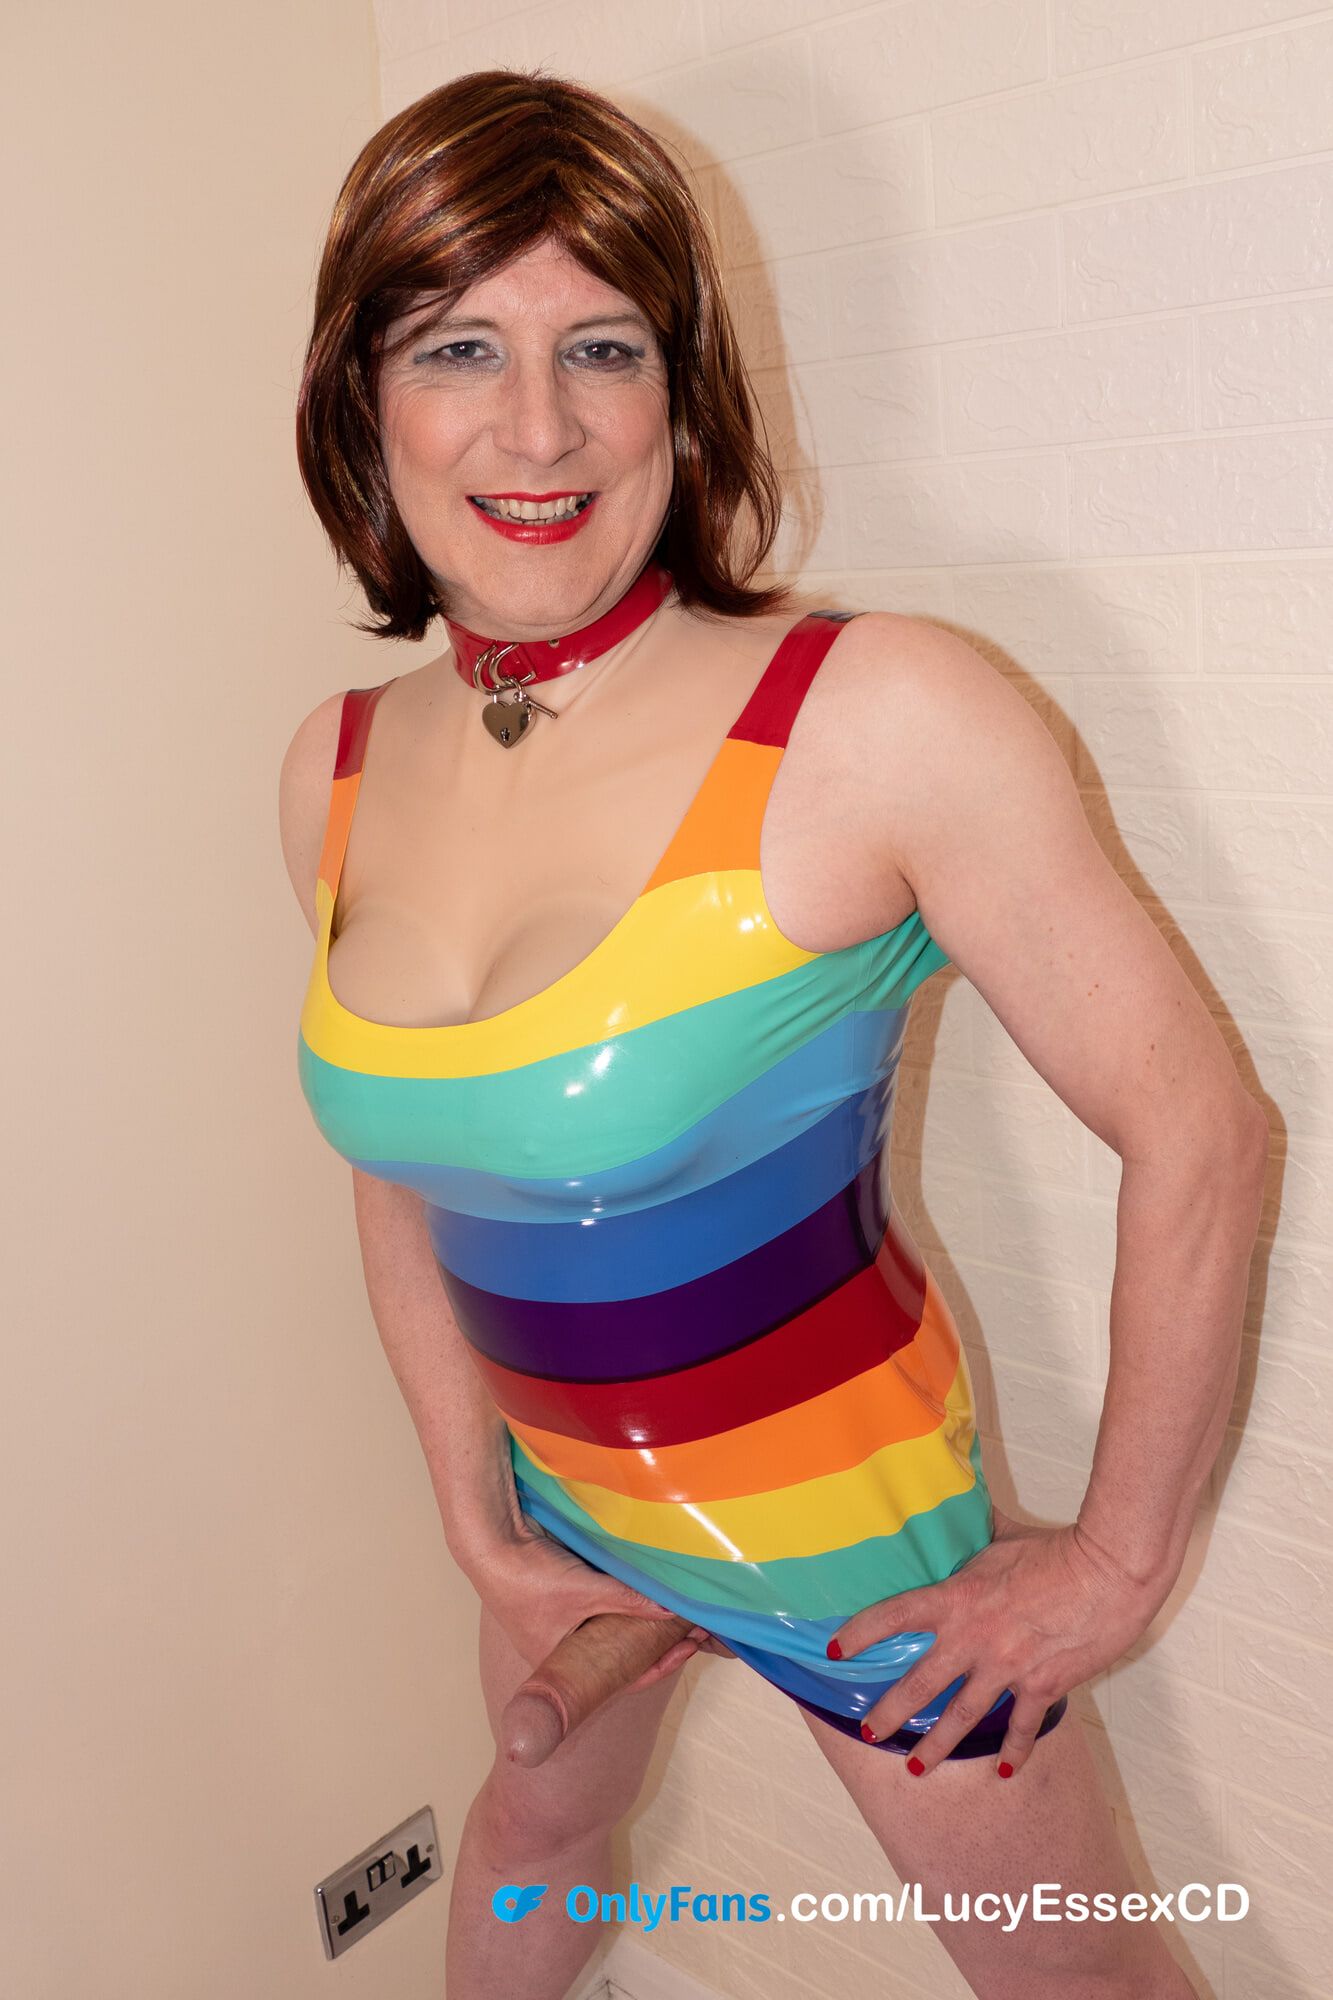 Big cock TGirl Lucy Essex CD new rainbow latex minidress #10